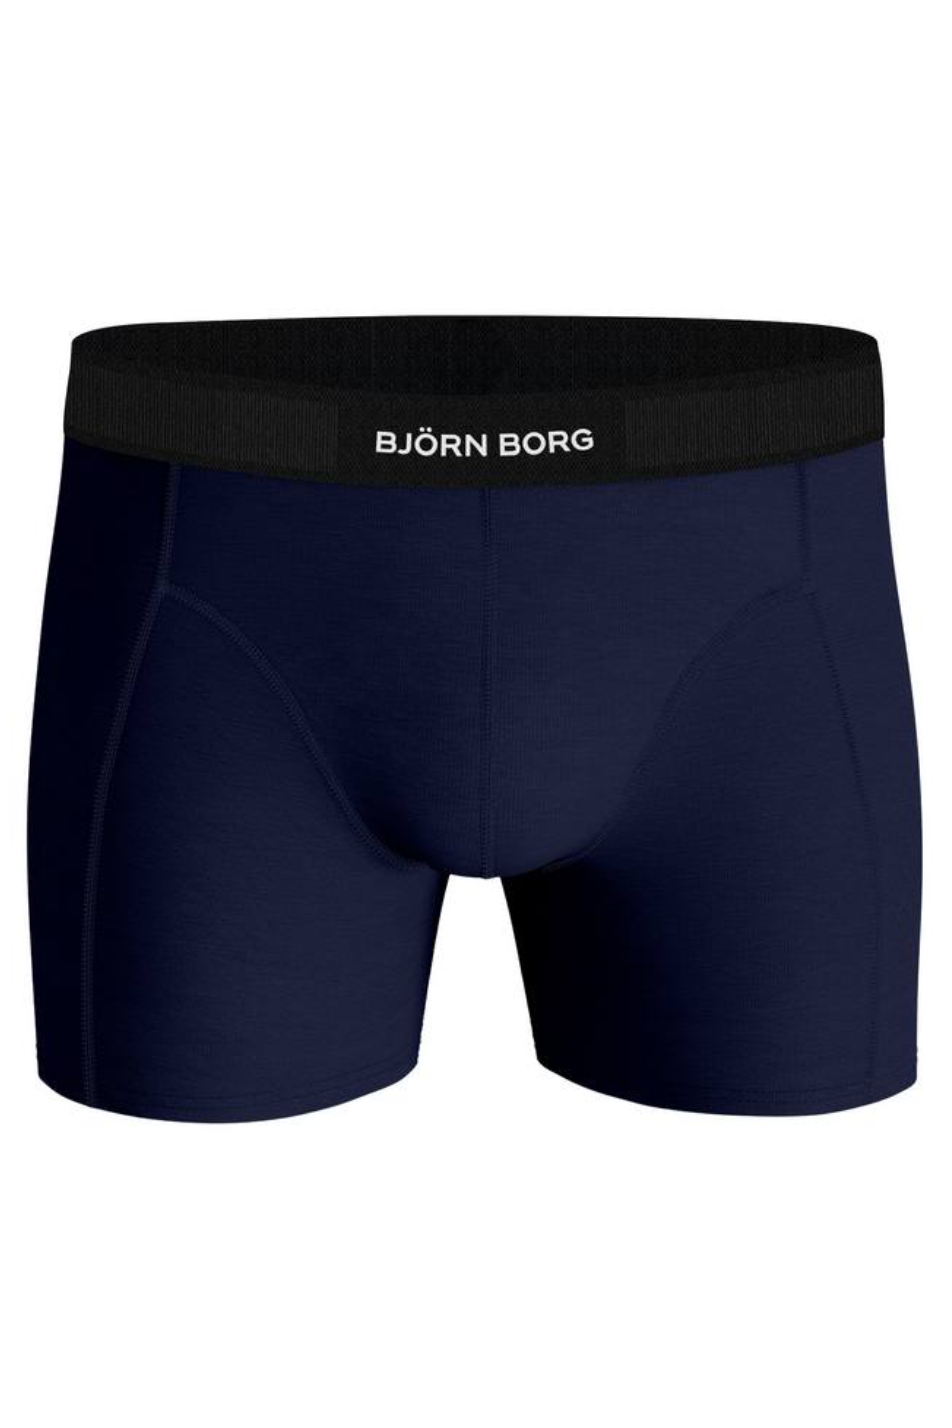 Björn Borg Premium Cotton Stretch Boxer 2 Pack